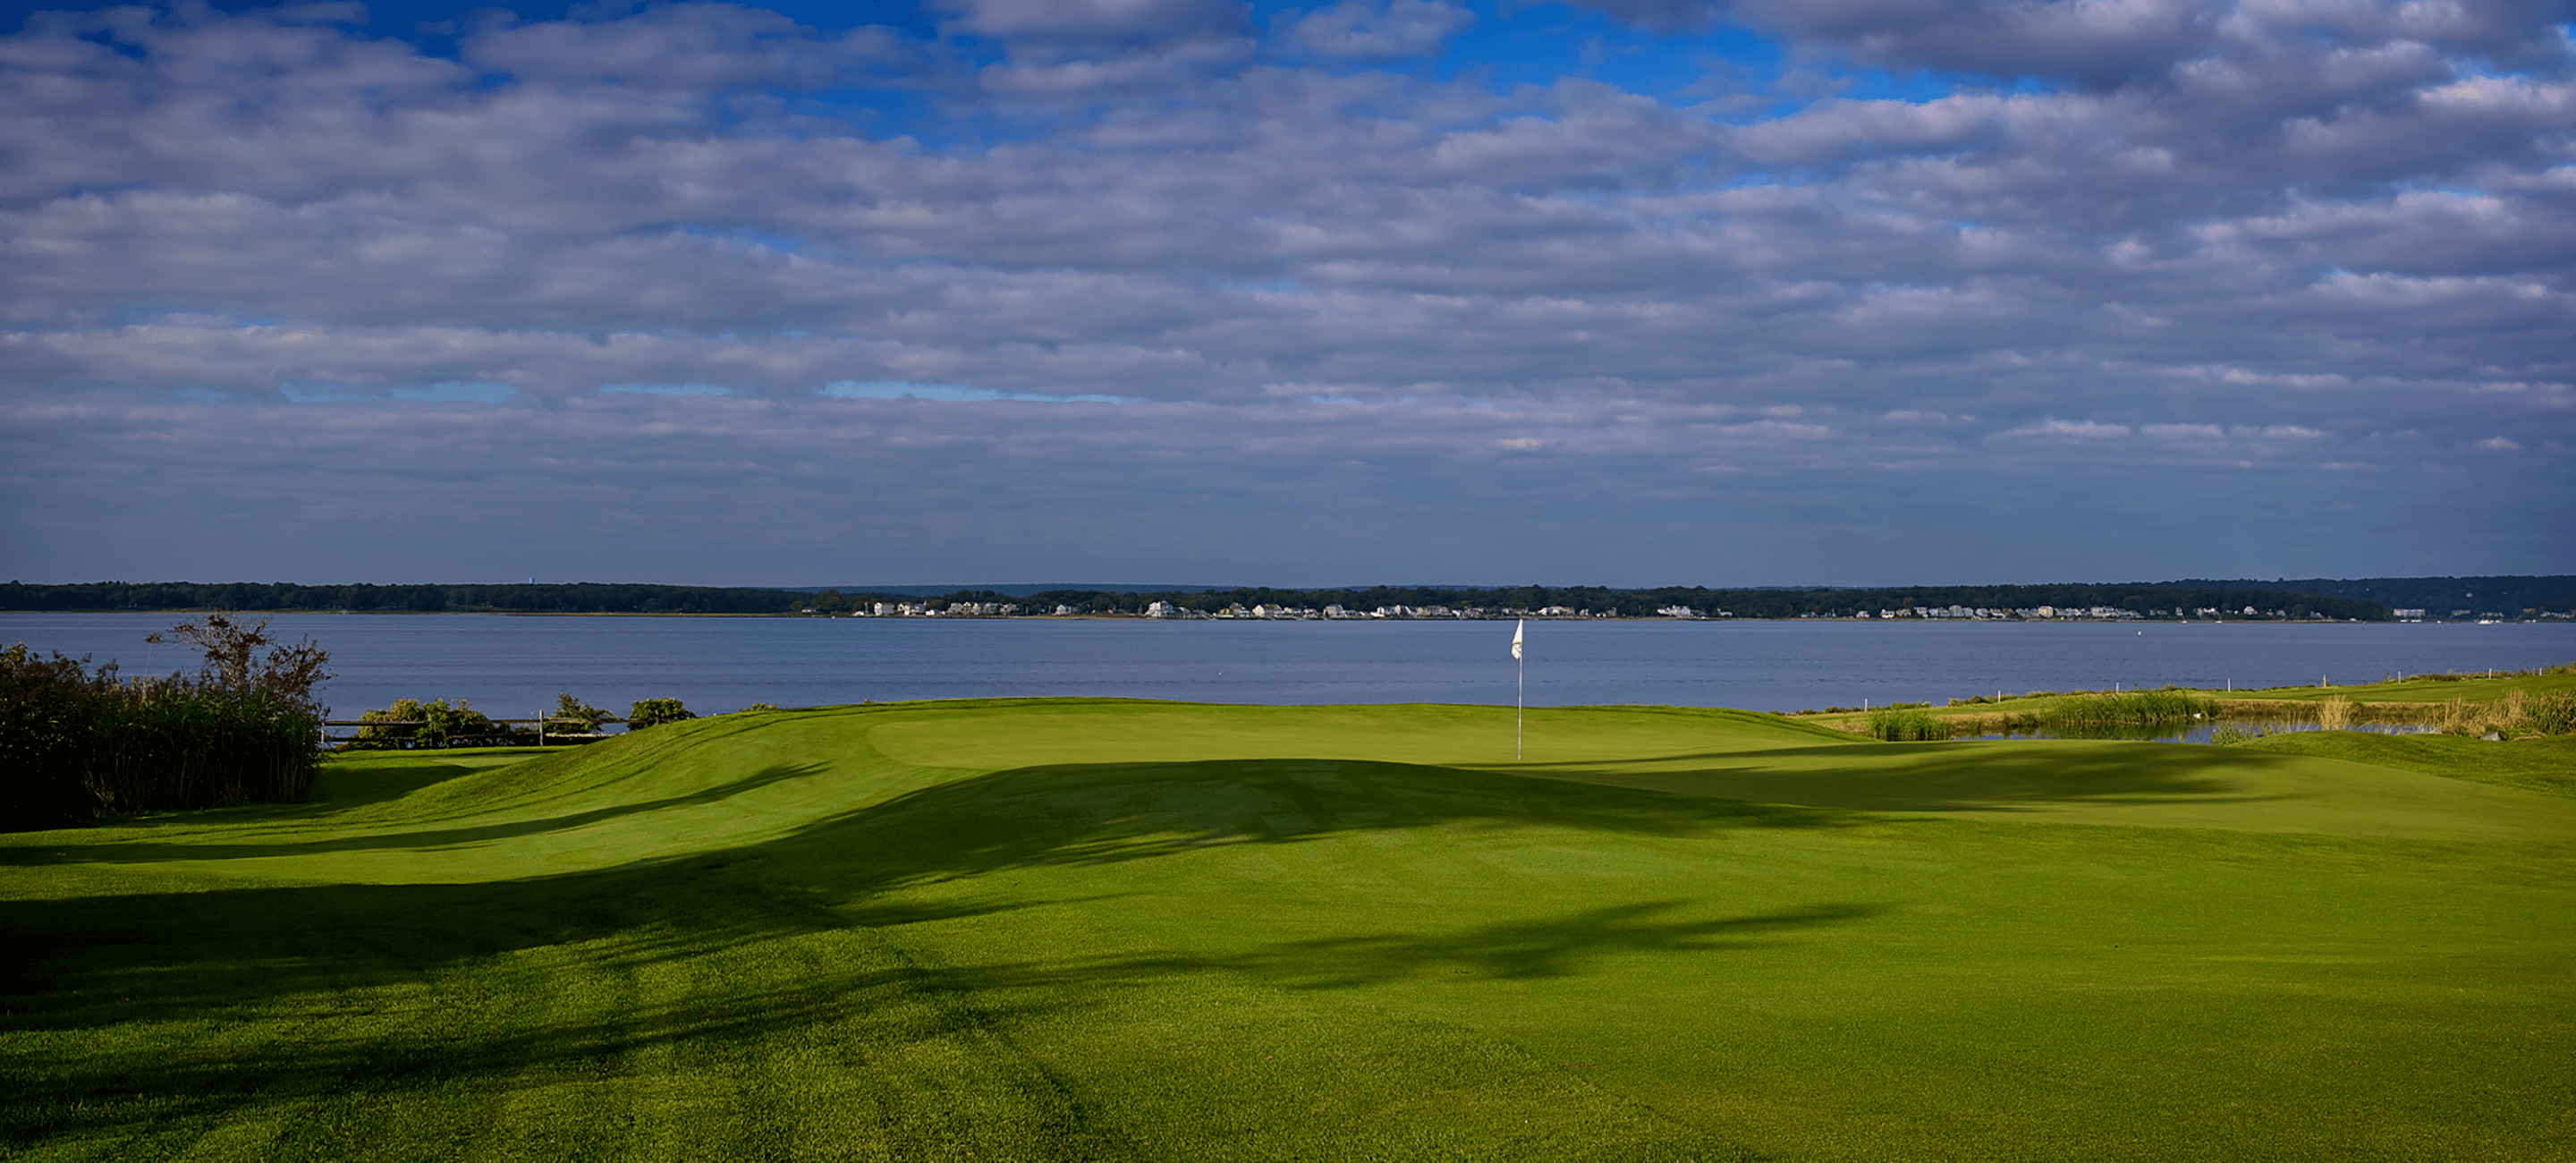 image of golf green along waterway